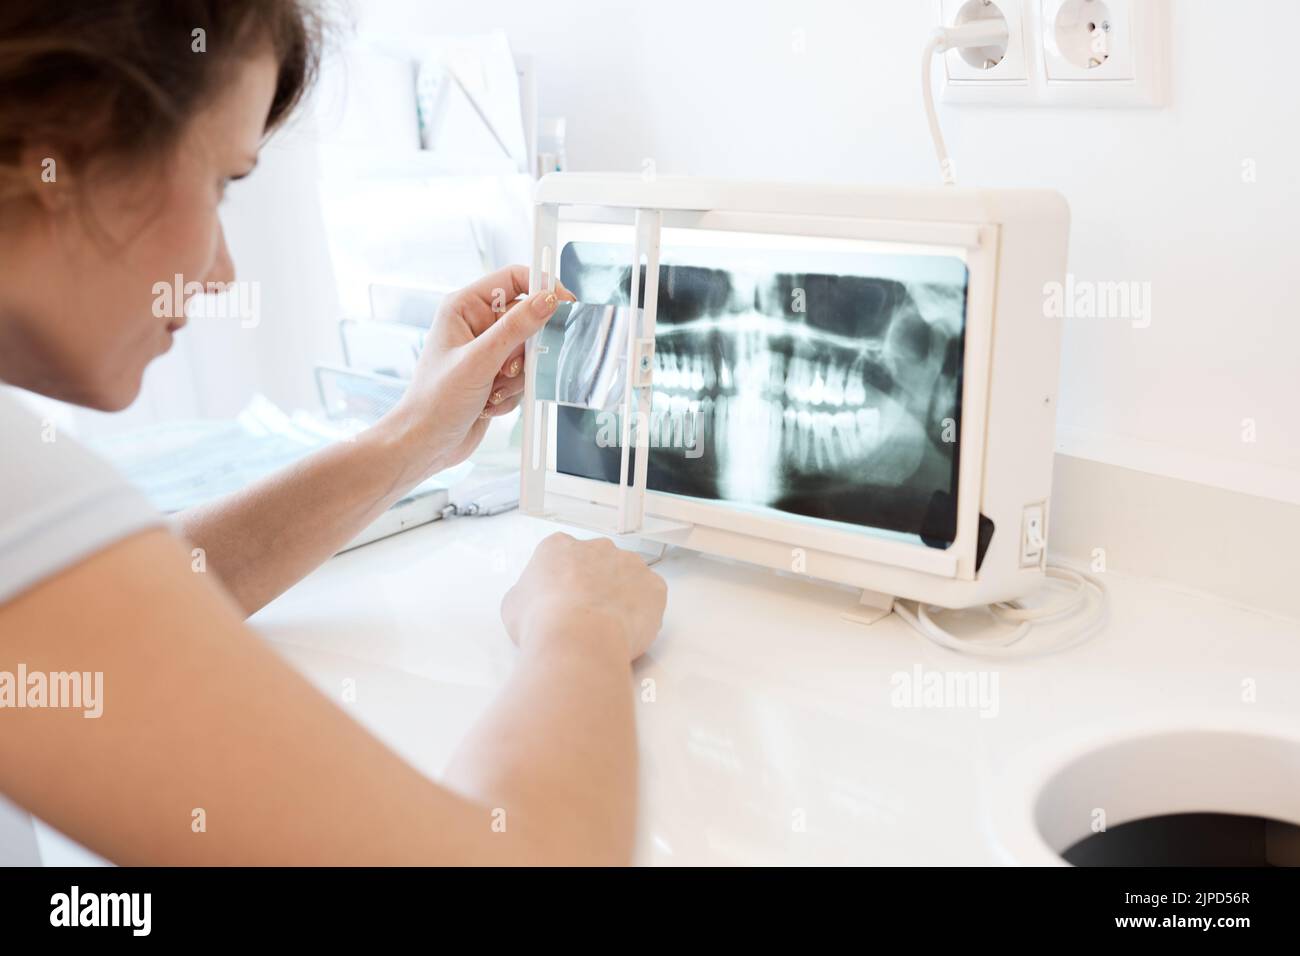 dentition, x-ray image, diagnosis, dentitions, radiology, x-rays, xray ...